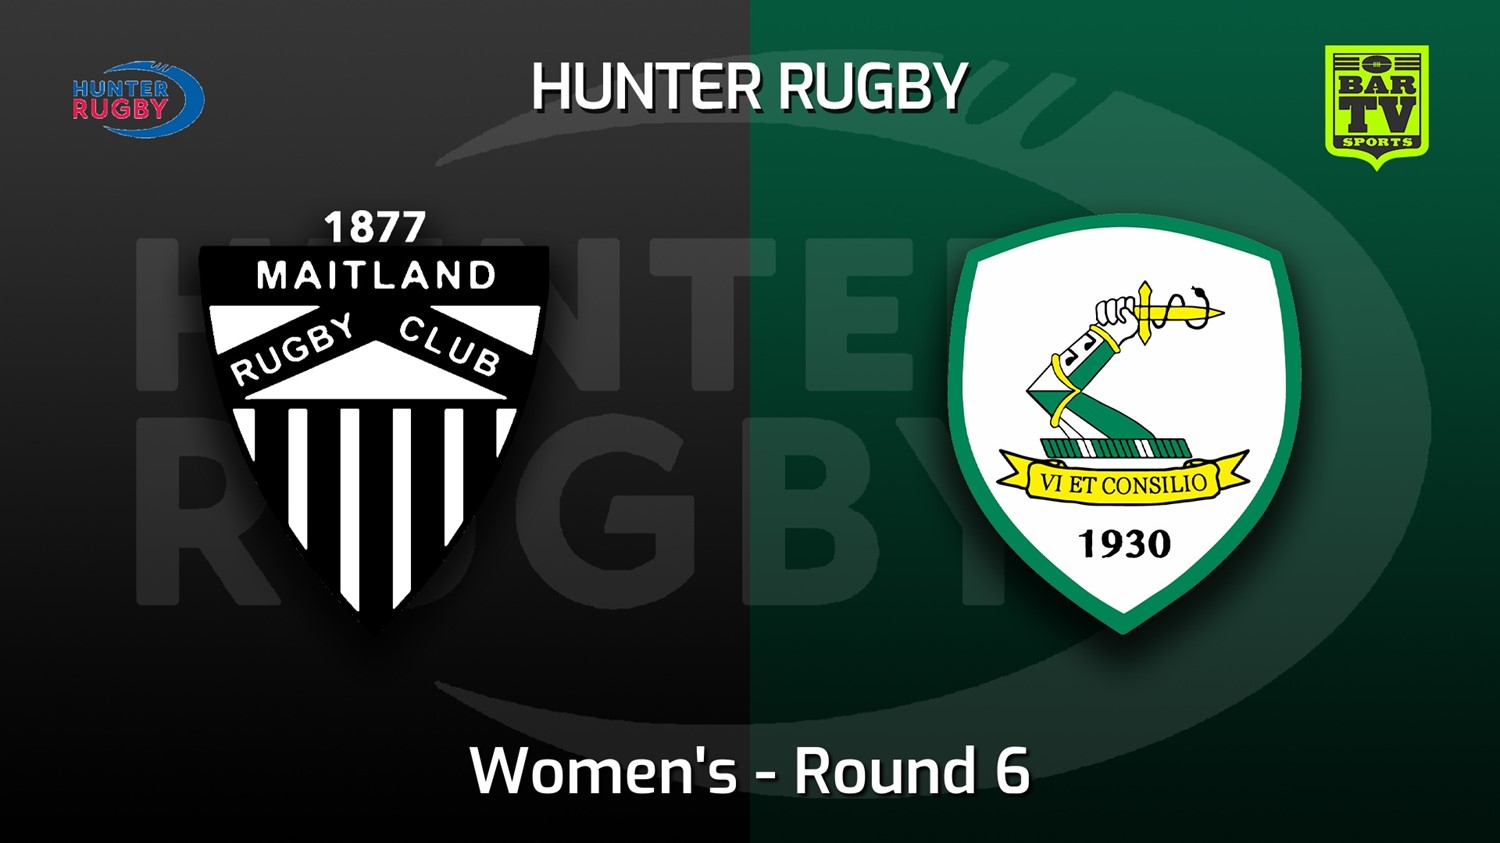 220528-Hunter Rugby Round 6 - Women's - Maitland v Merewether Carlton Slate Image